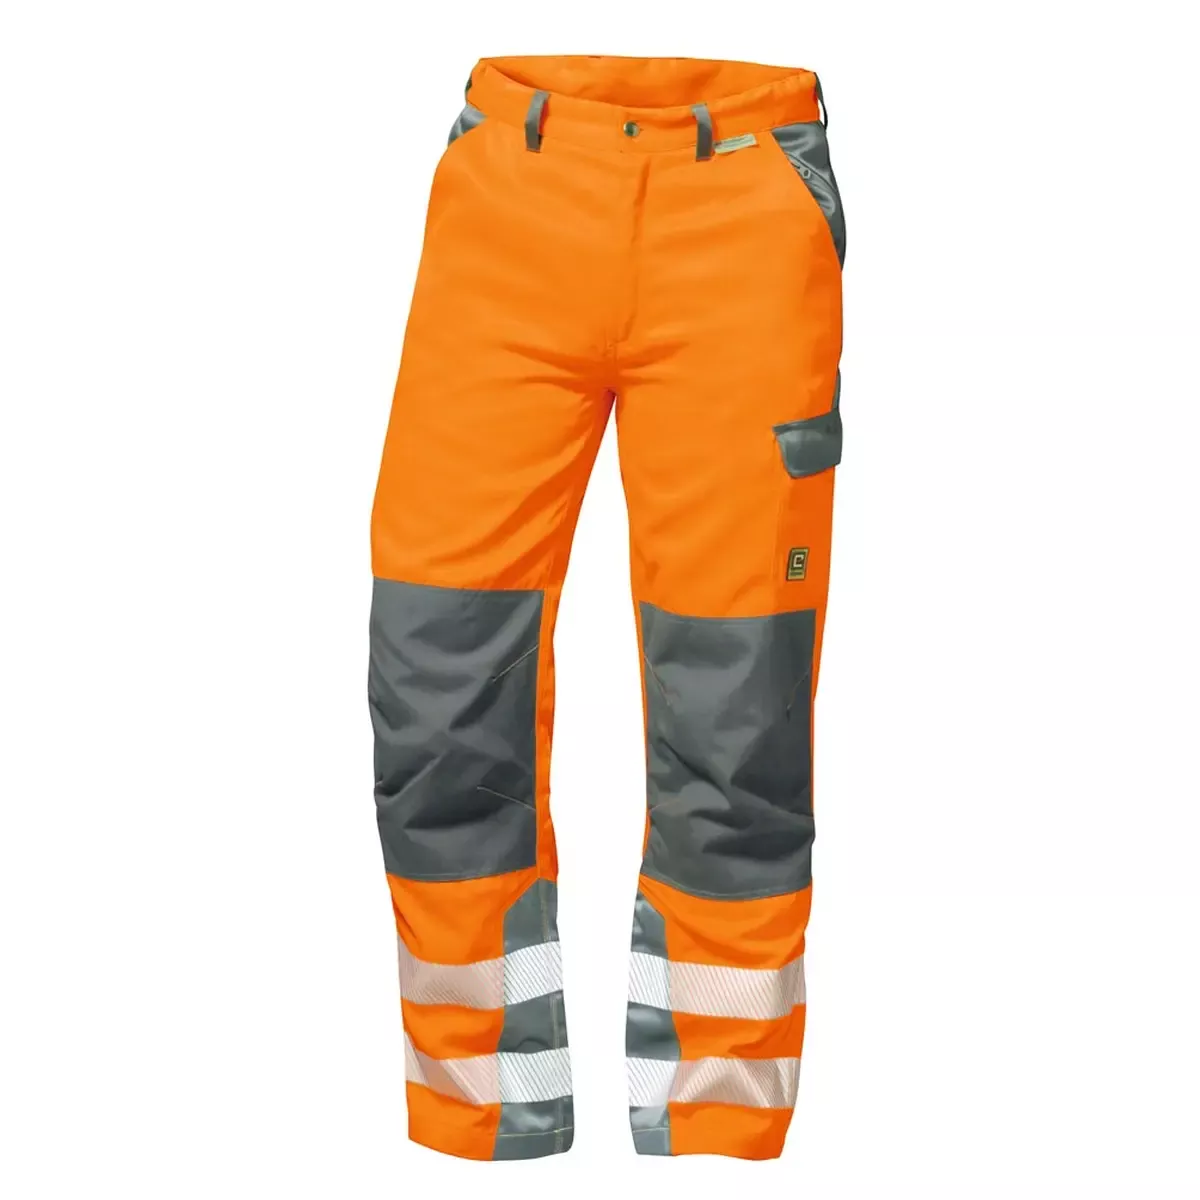 Warnschutz-Bundhose Nizza, Farbe HiVis orange/grau, Gr.46